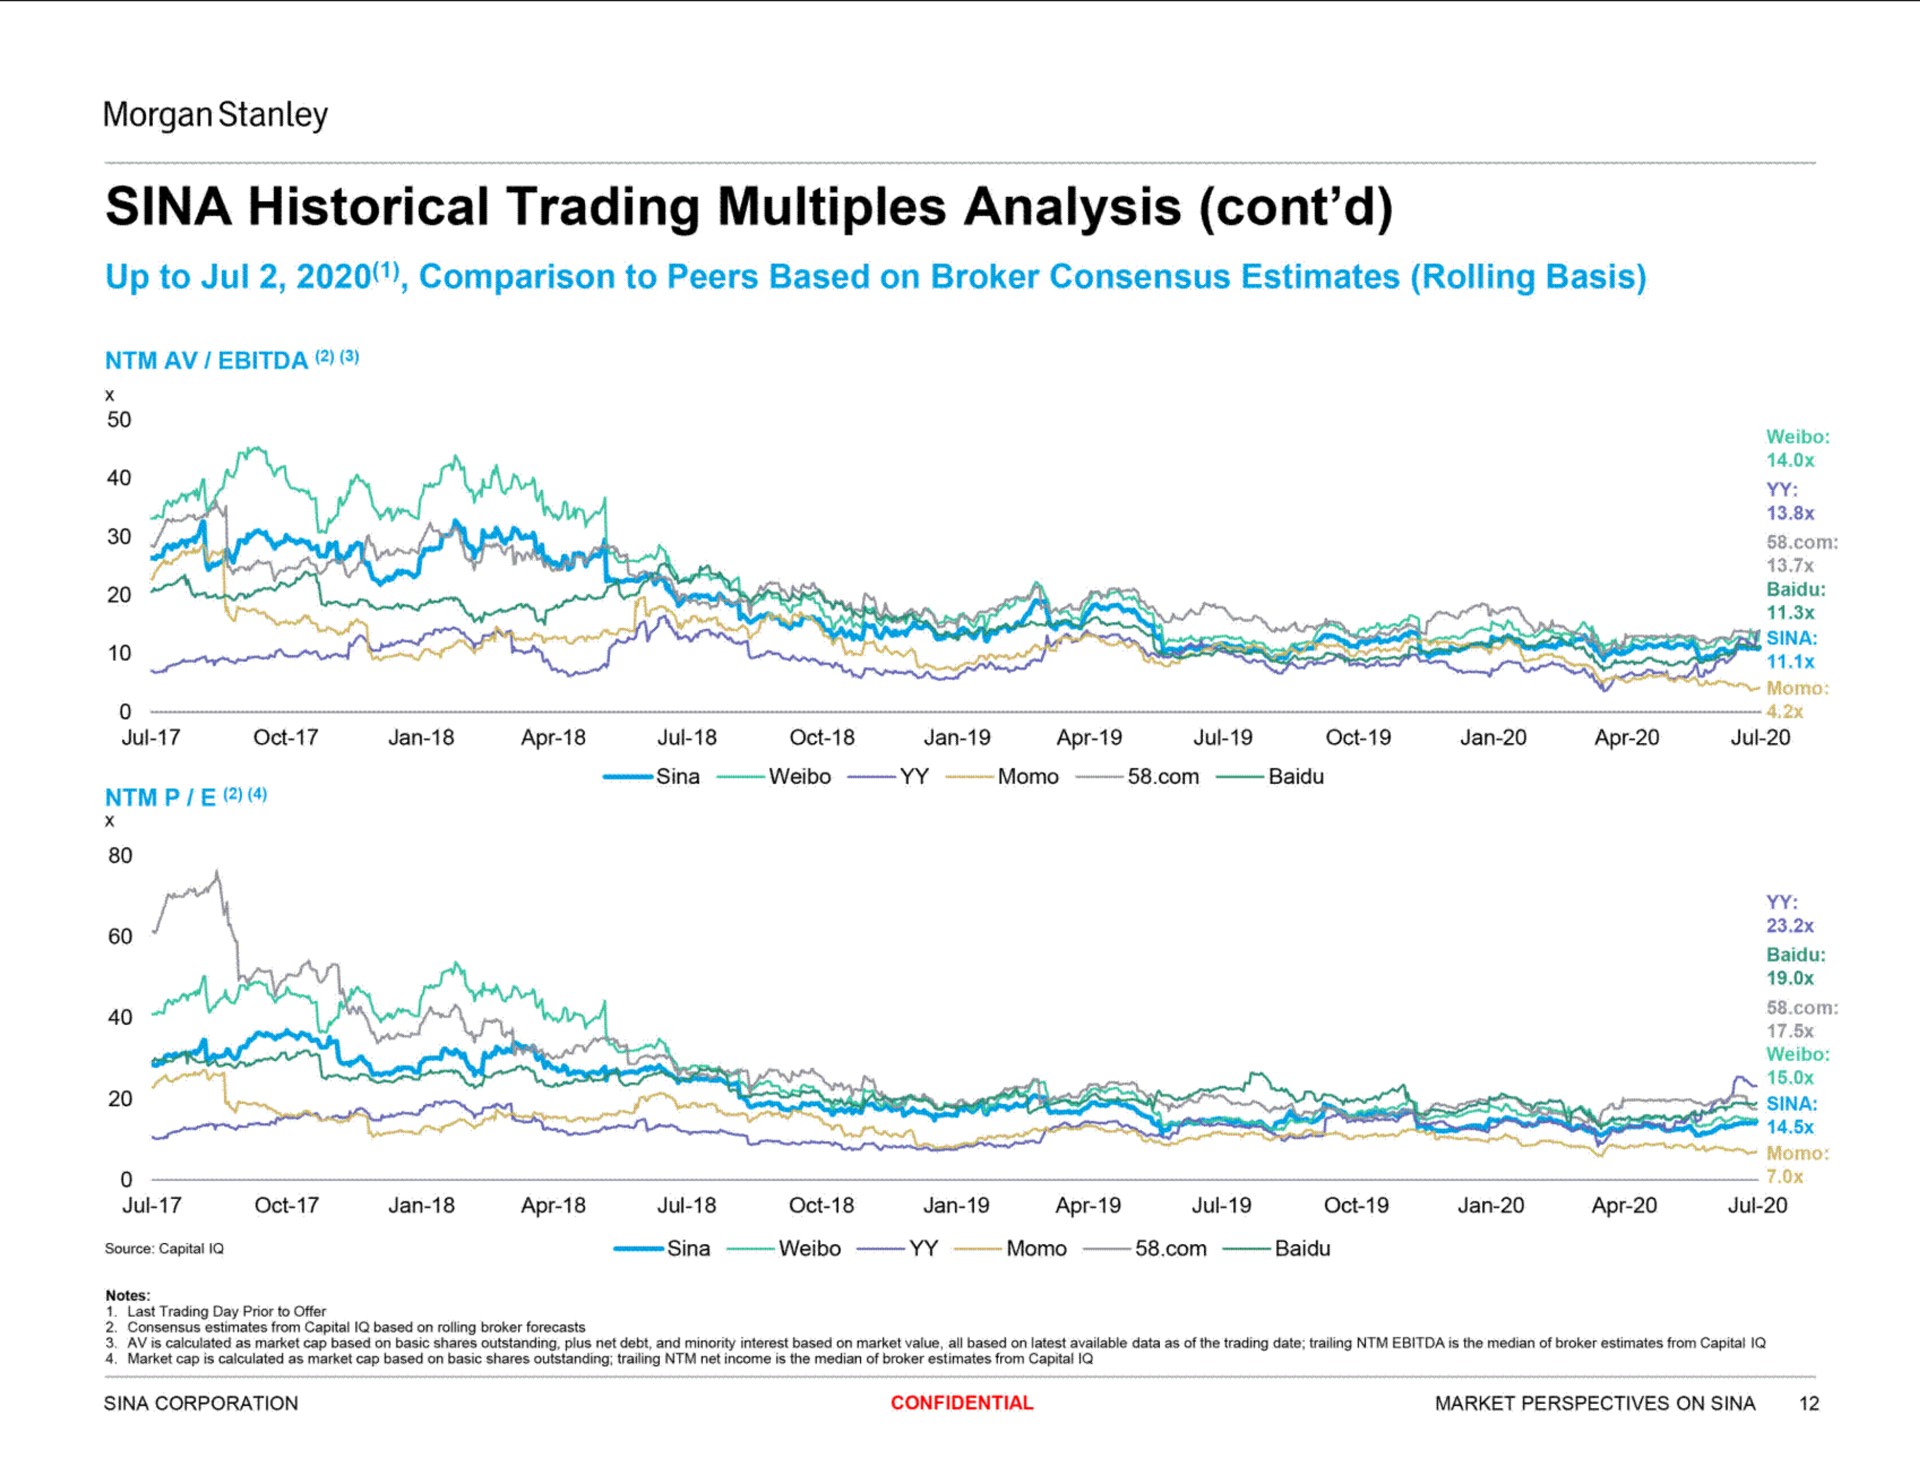 sina historical trading multiples analysis | Morgan Stanley